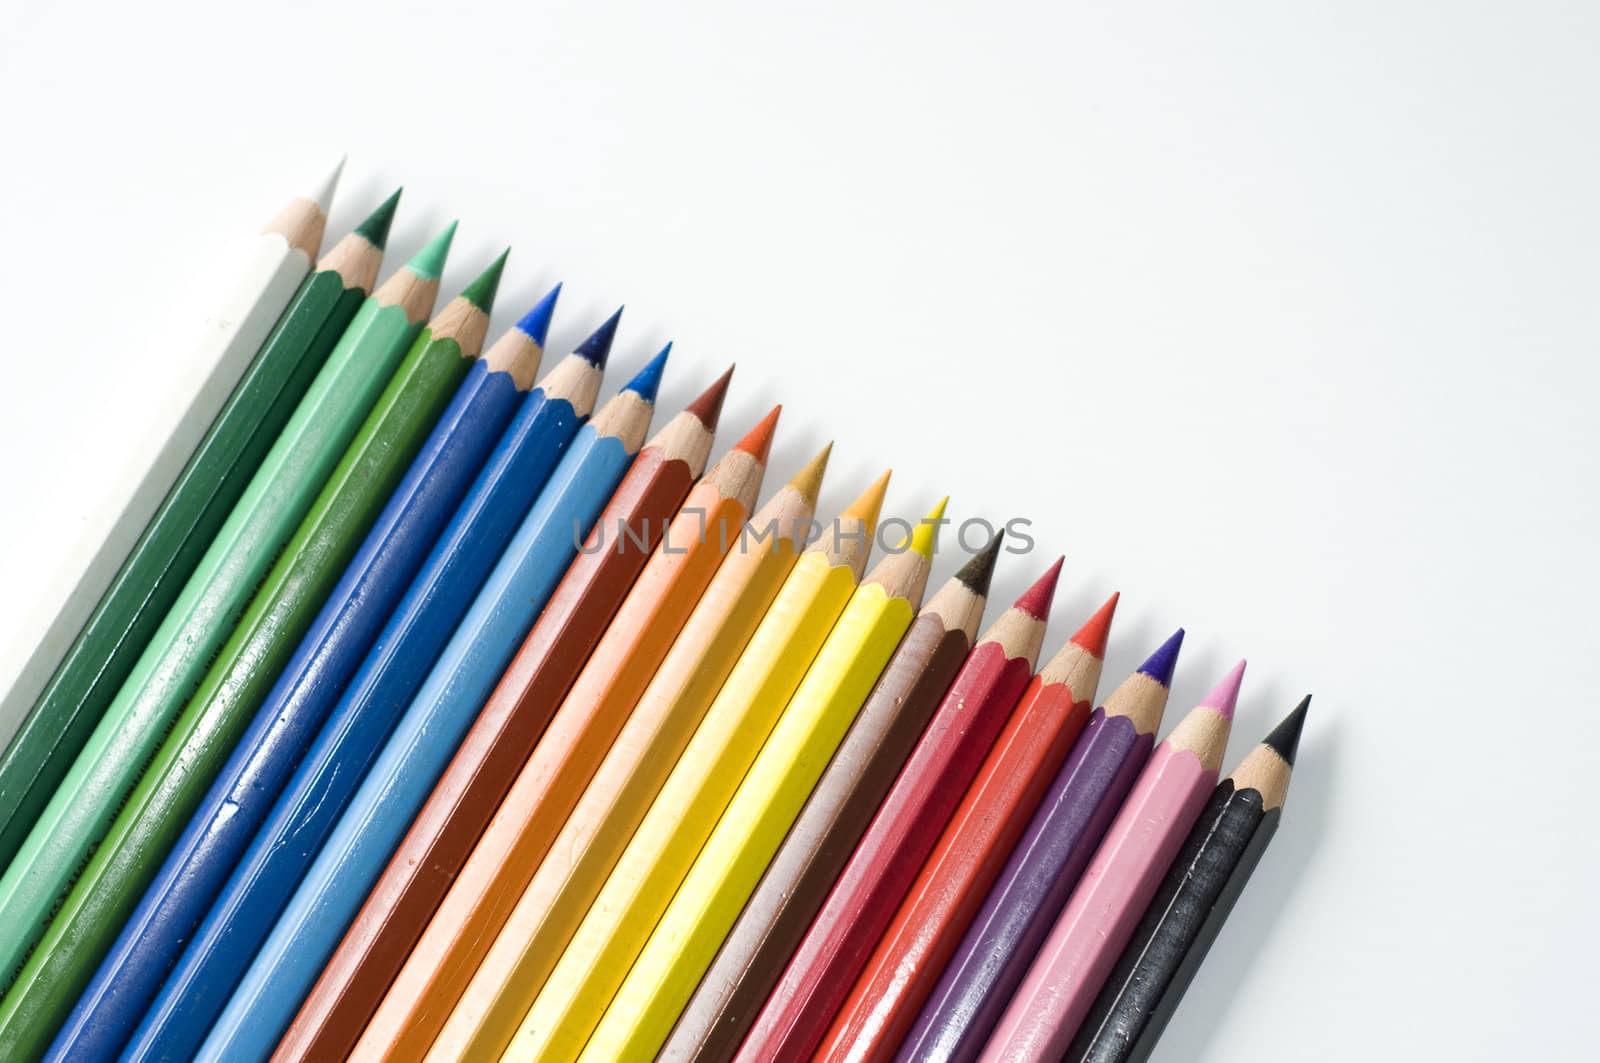 pencils on white background by Oledjio